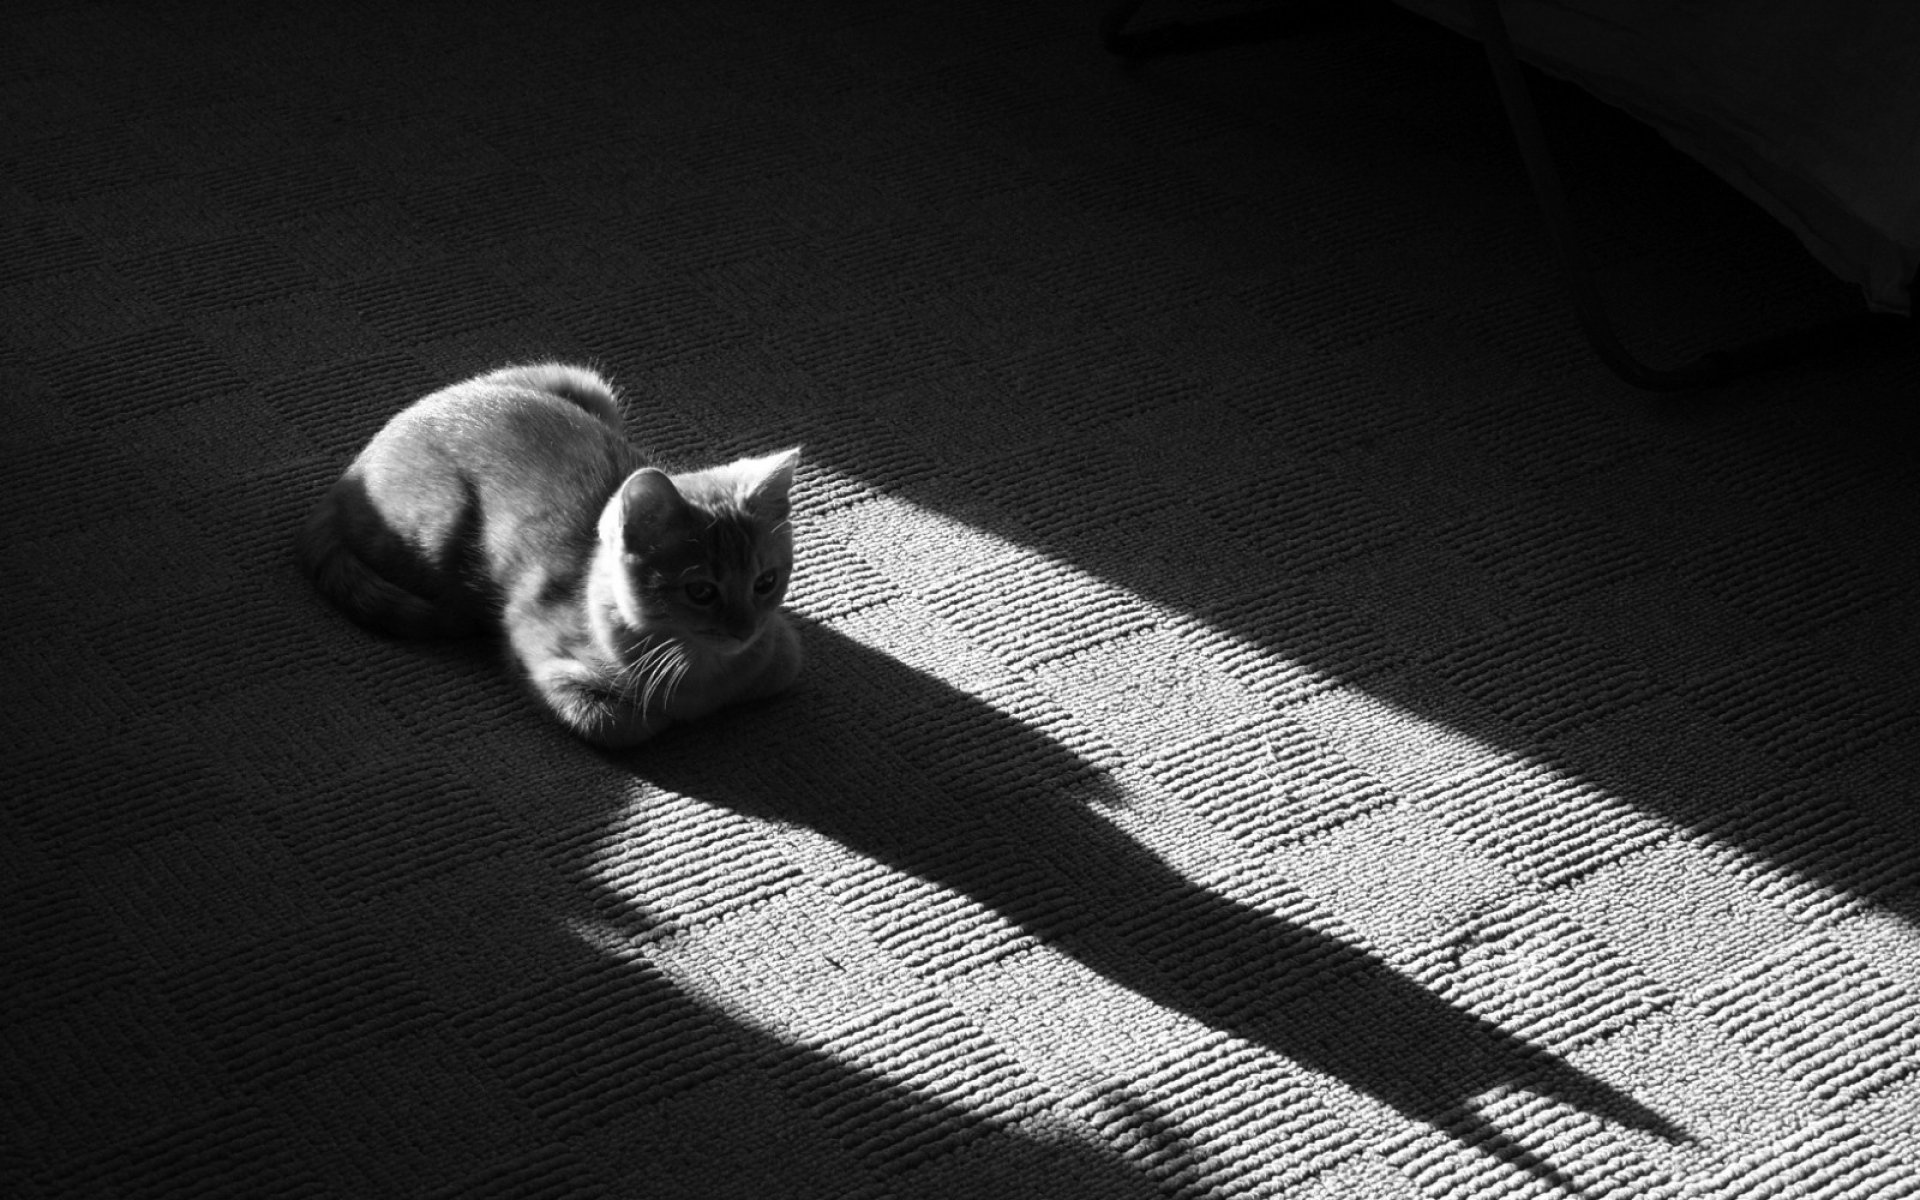 Carpet shadow